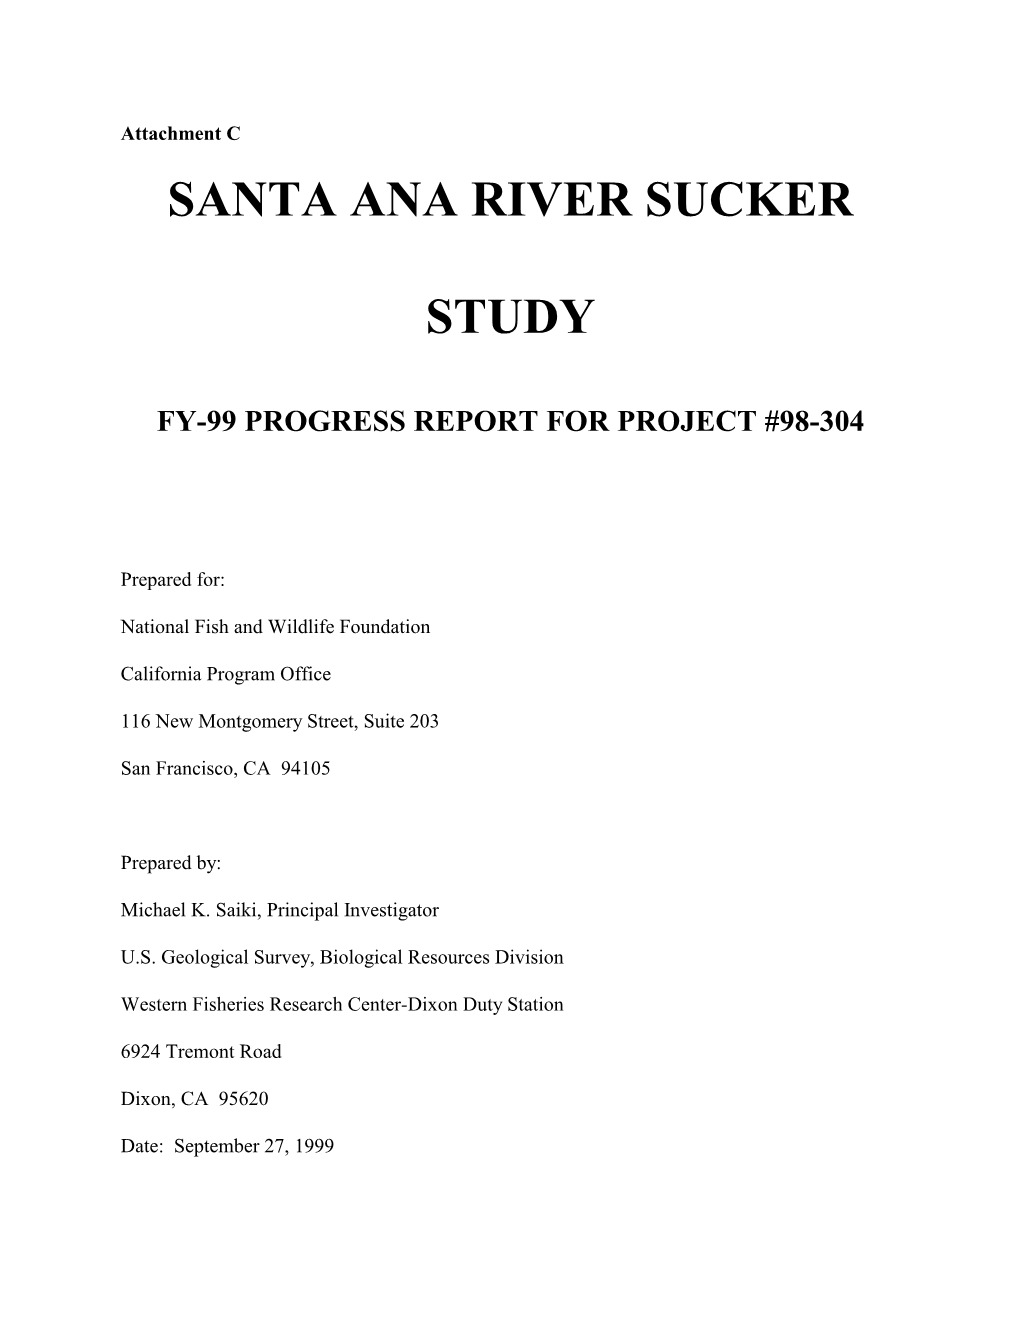 Santa Ana River Sucker Study